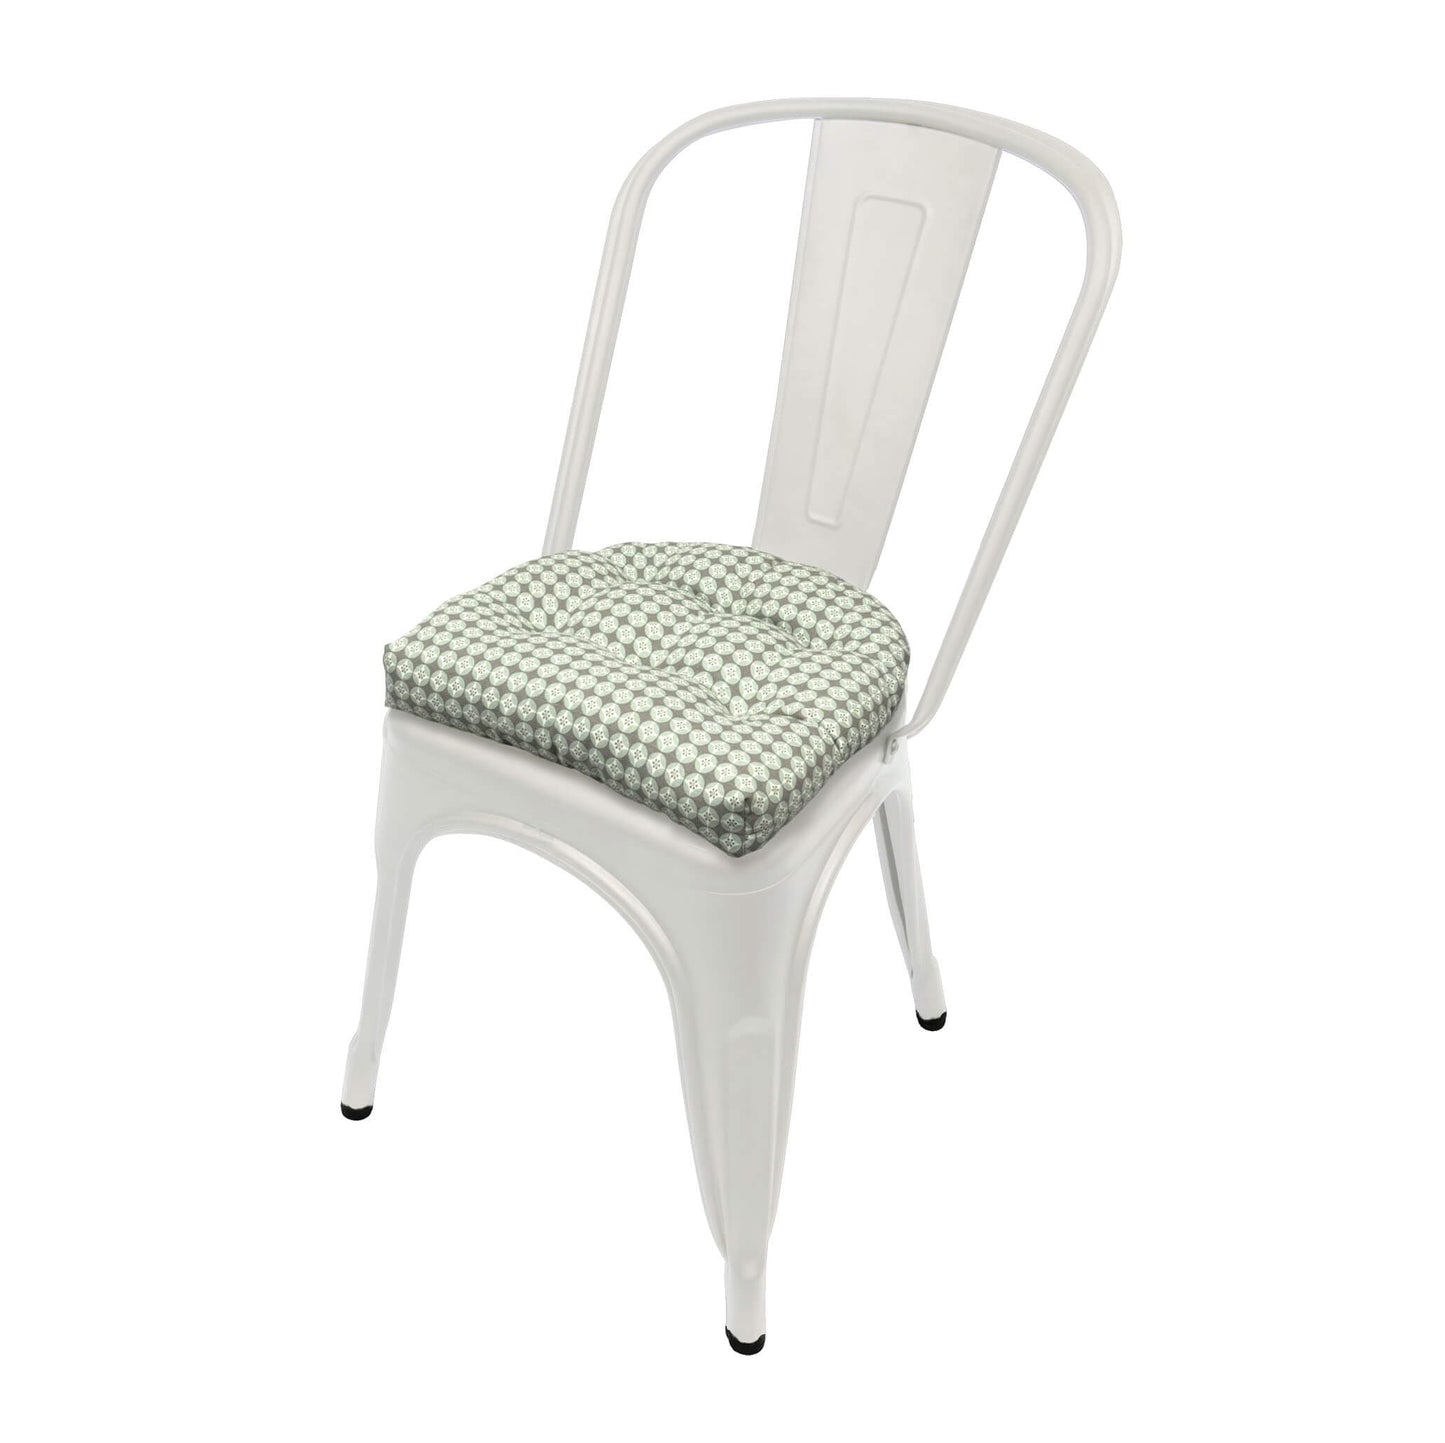 Bliss Industrial Chair Cushion - Barnett Home Decor - Blue & Grey